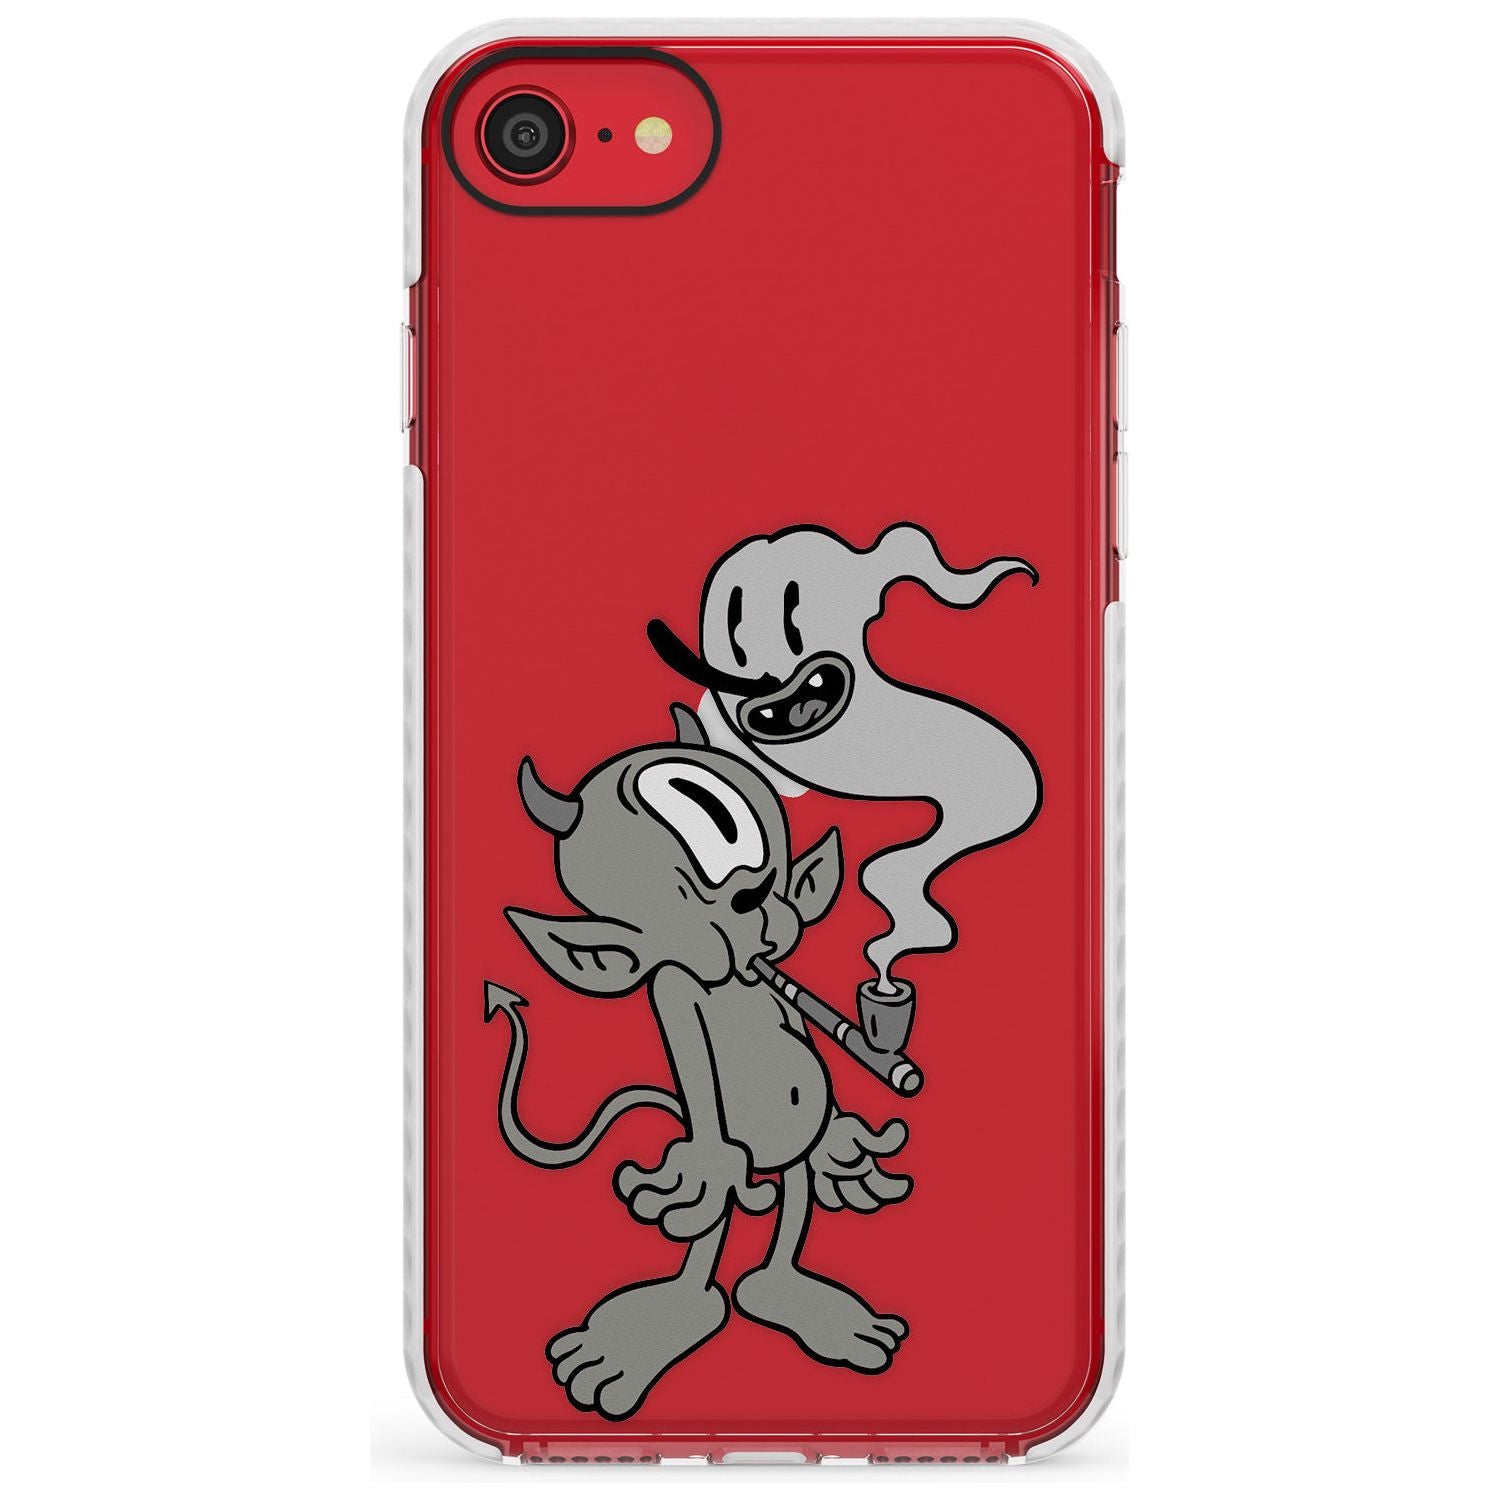 Pipe Goblin Impact Phone Case for iPhone SE 8 7 Plus